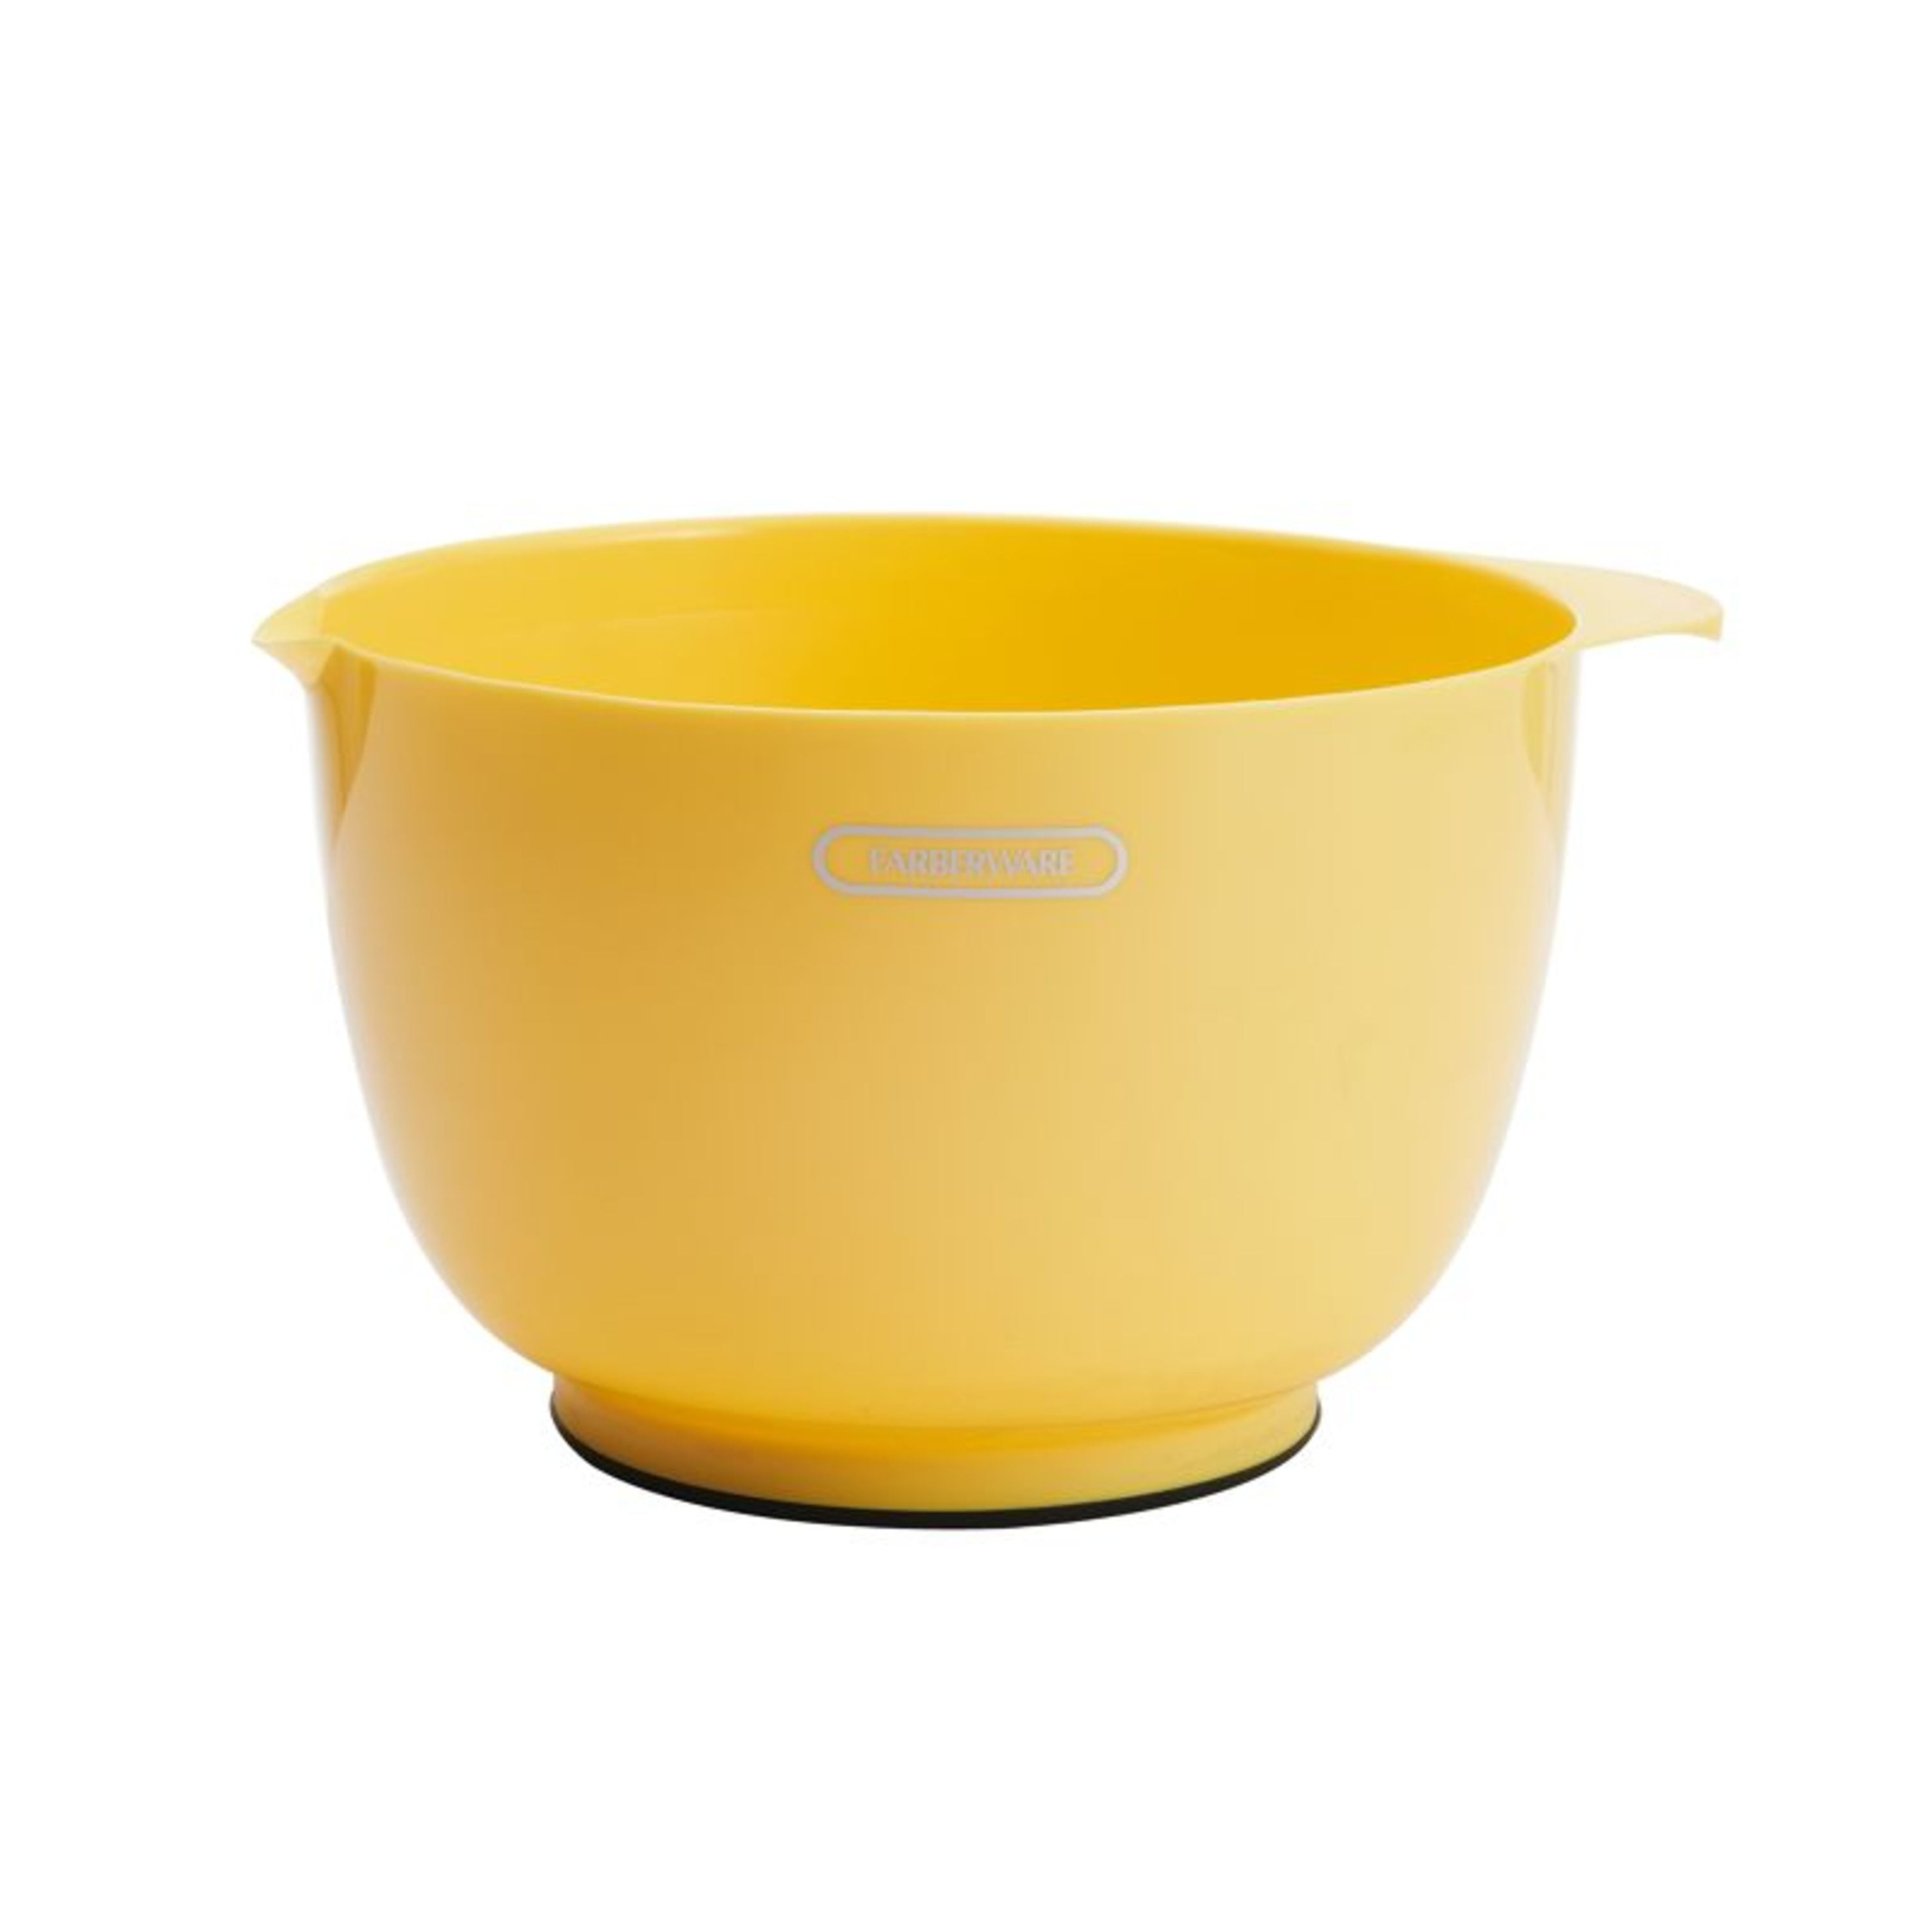 Farberware - 5216128 Farberware Professional Plastic Mixing Bowls, Set of  3, Orange/Red/LightGreen